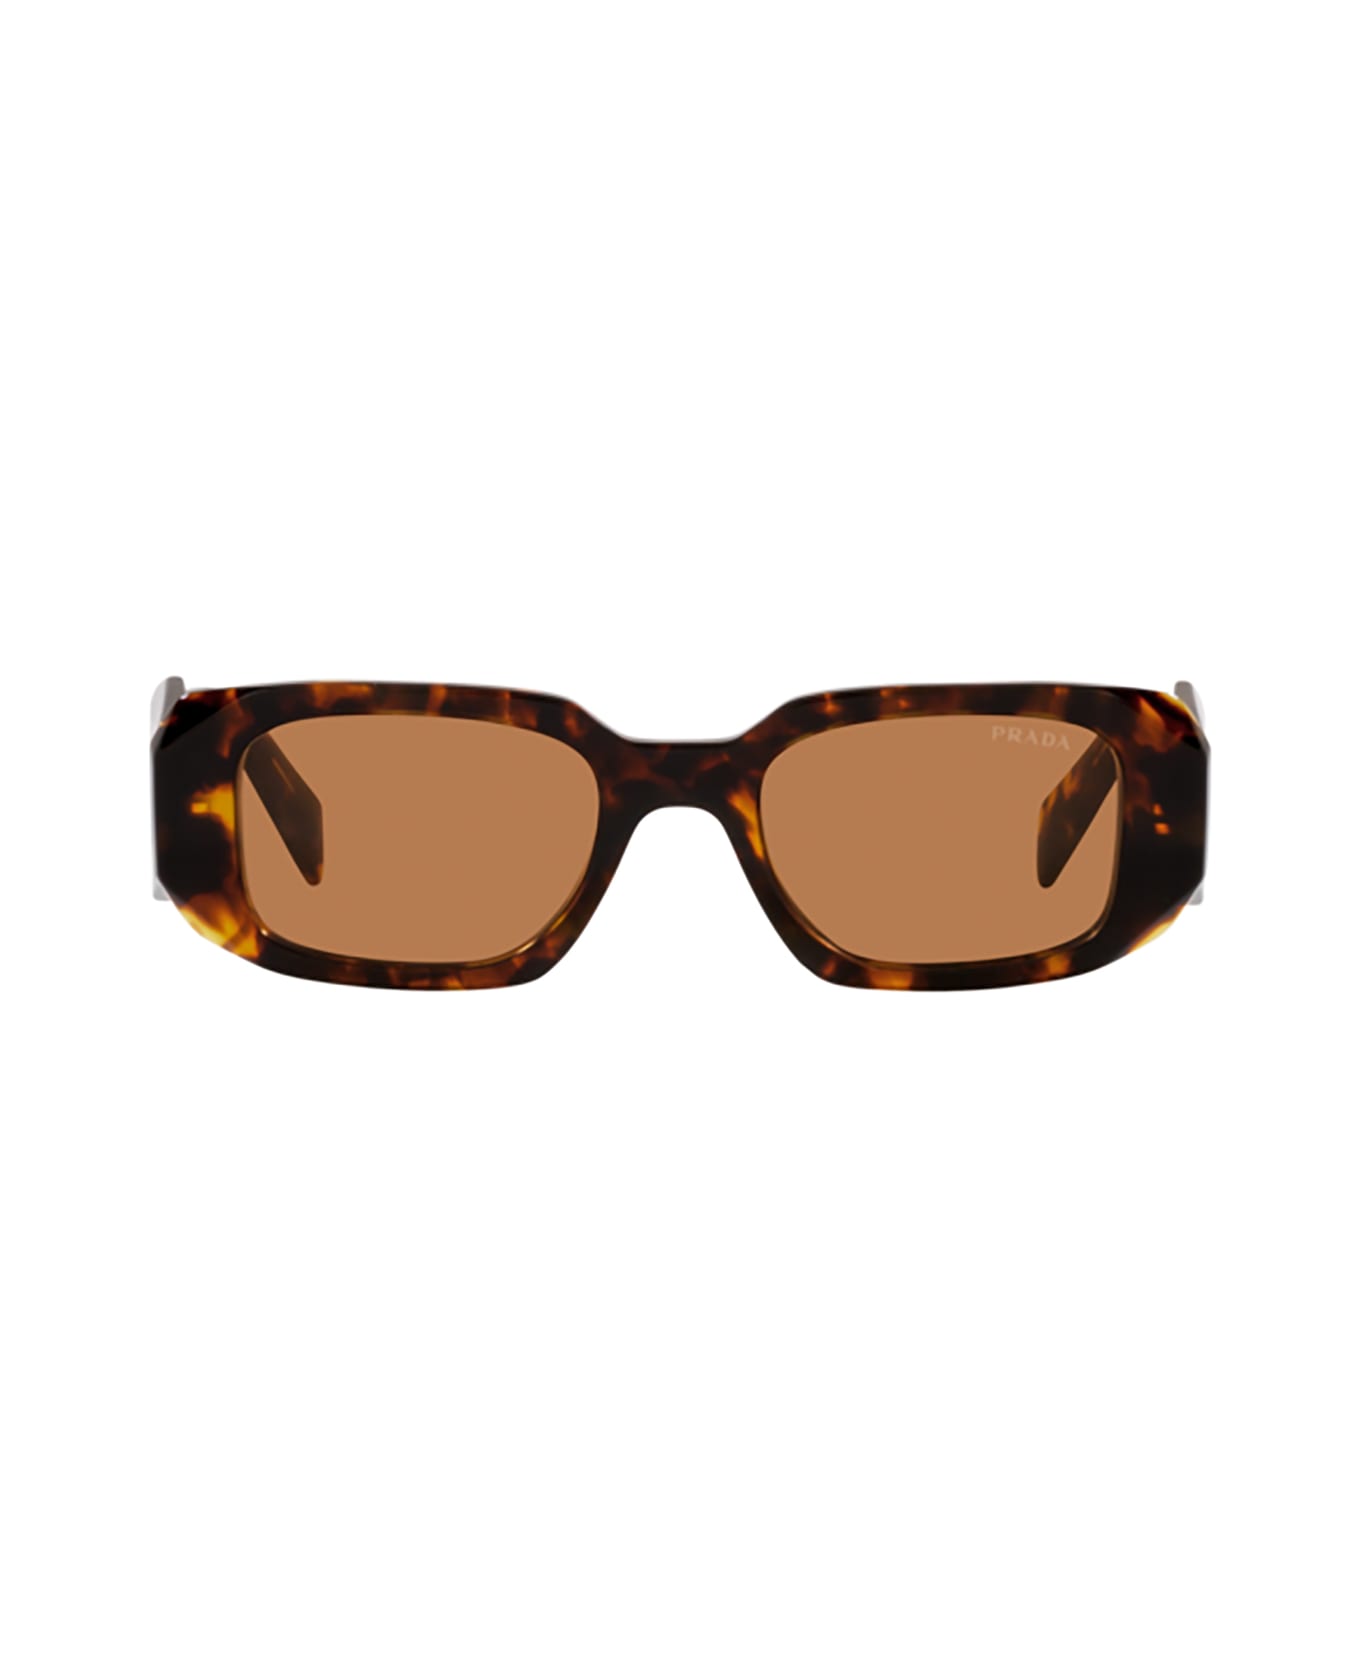 Prada Eyewear Pr 17ws Honey Tortoise Sunglasses - Honey Tortoise